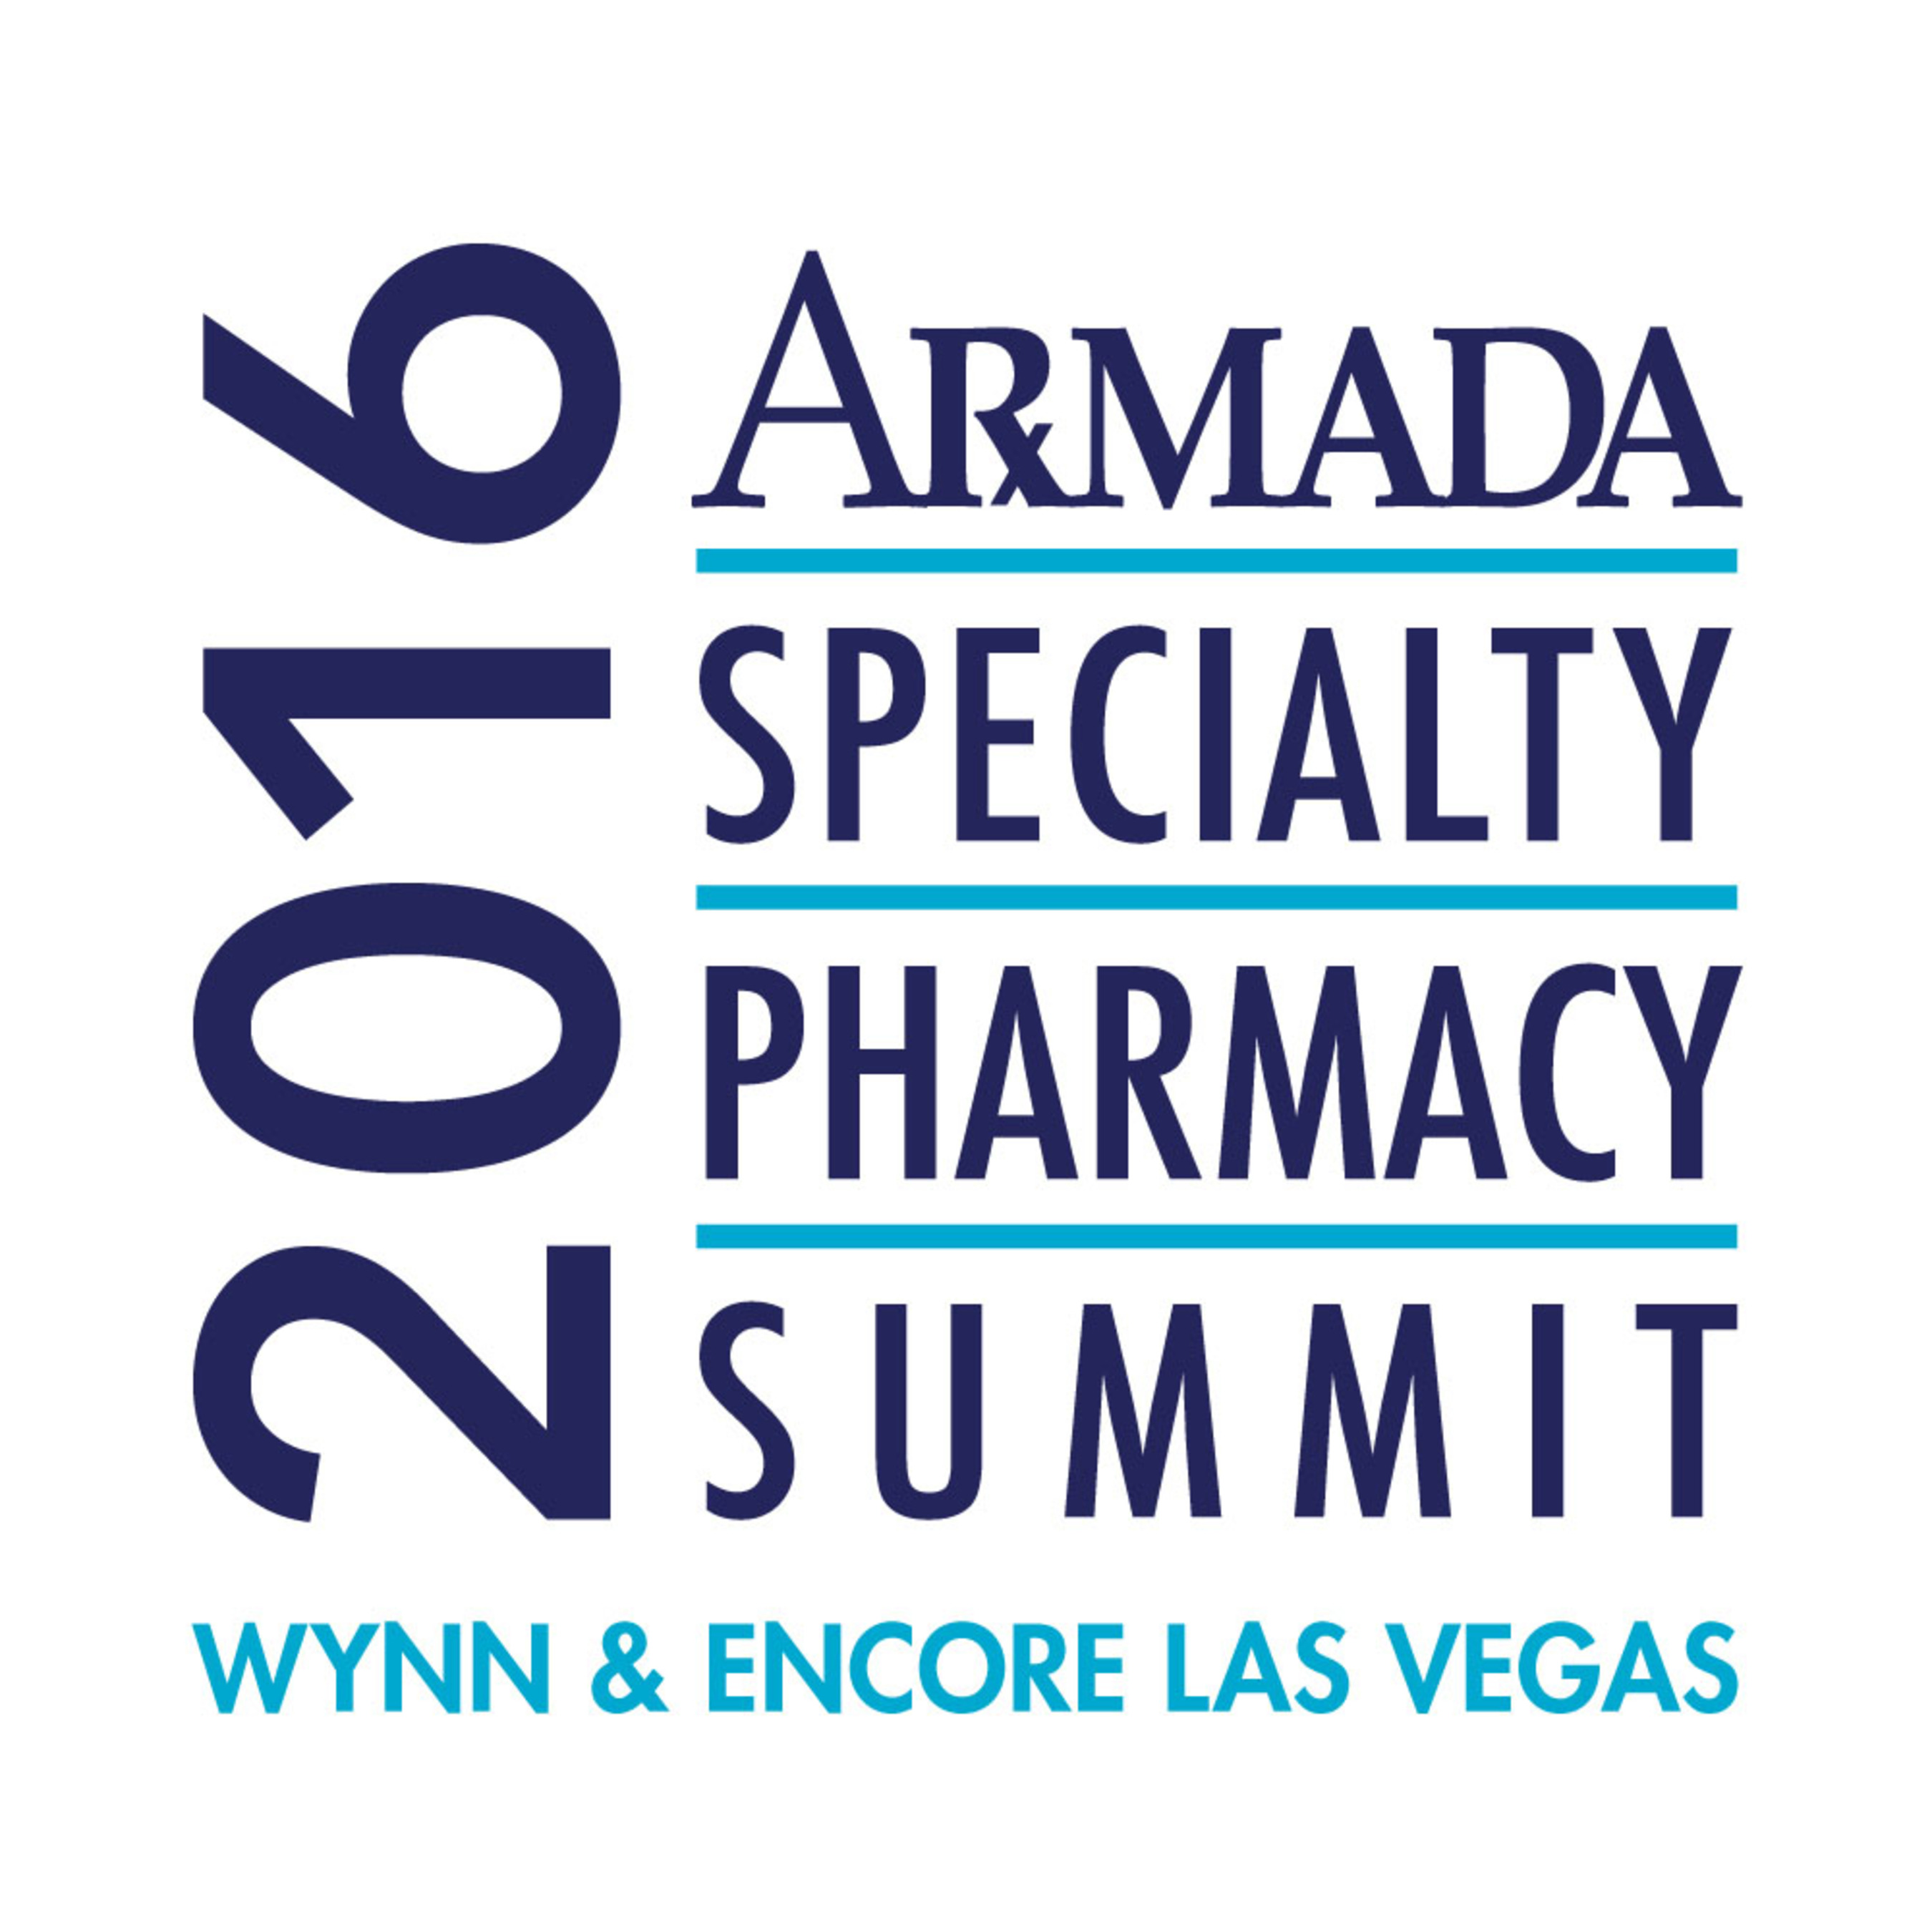 The 2015 Armada Specialty Pharmacy Summit will be held May 4-8, 2015 at Wynn Las Vegas